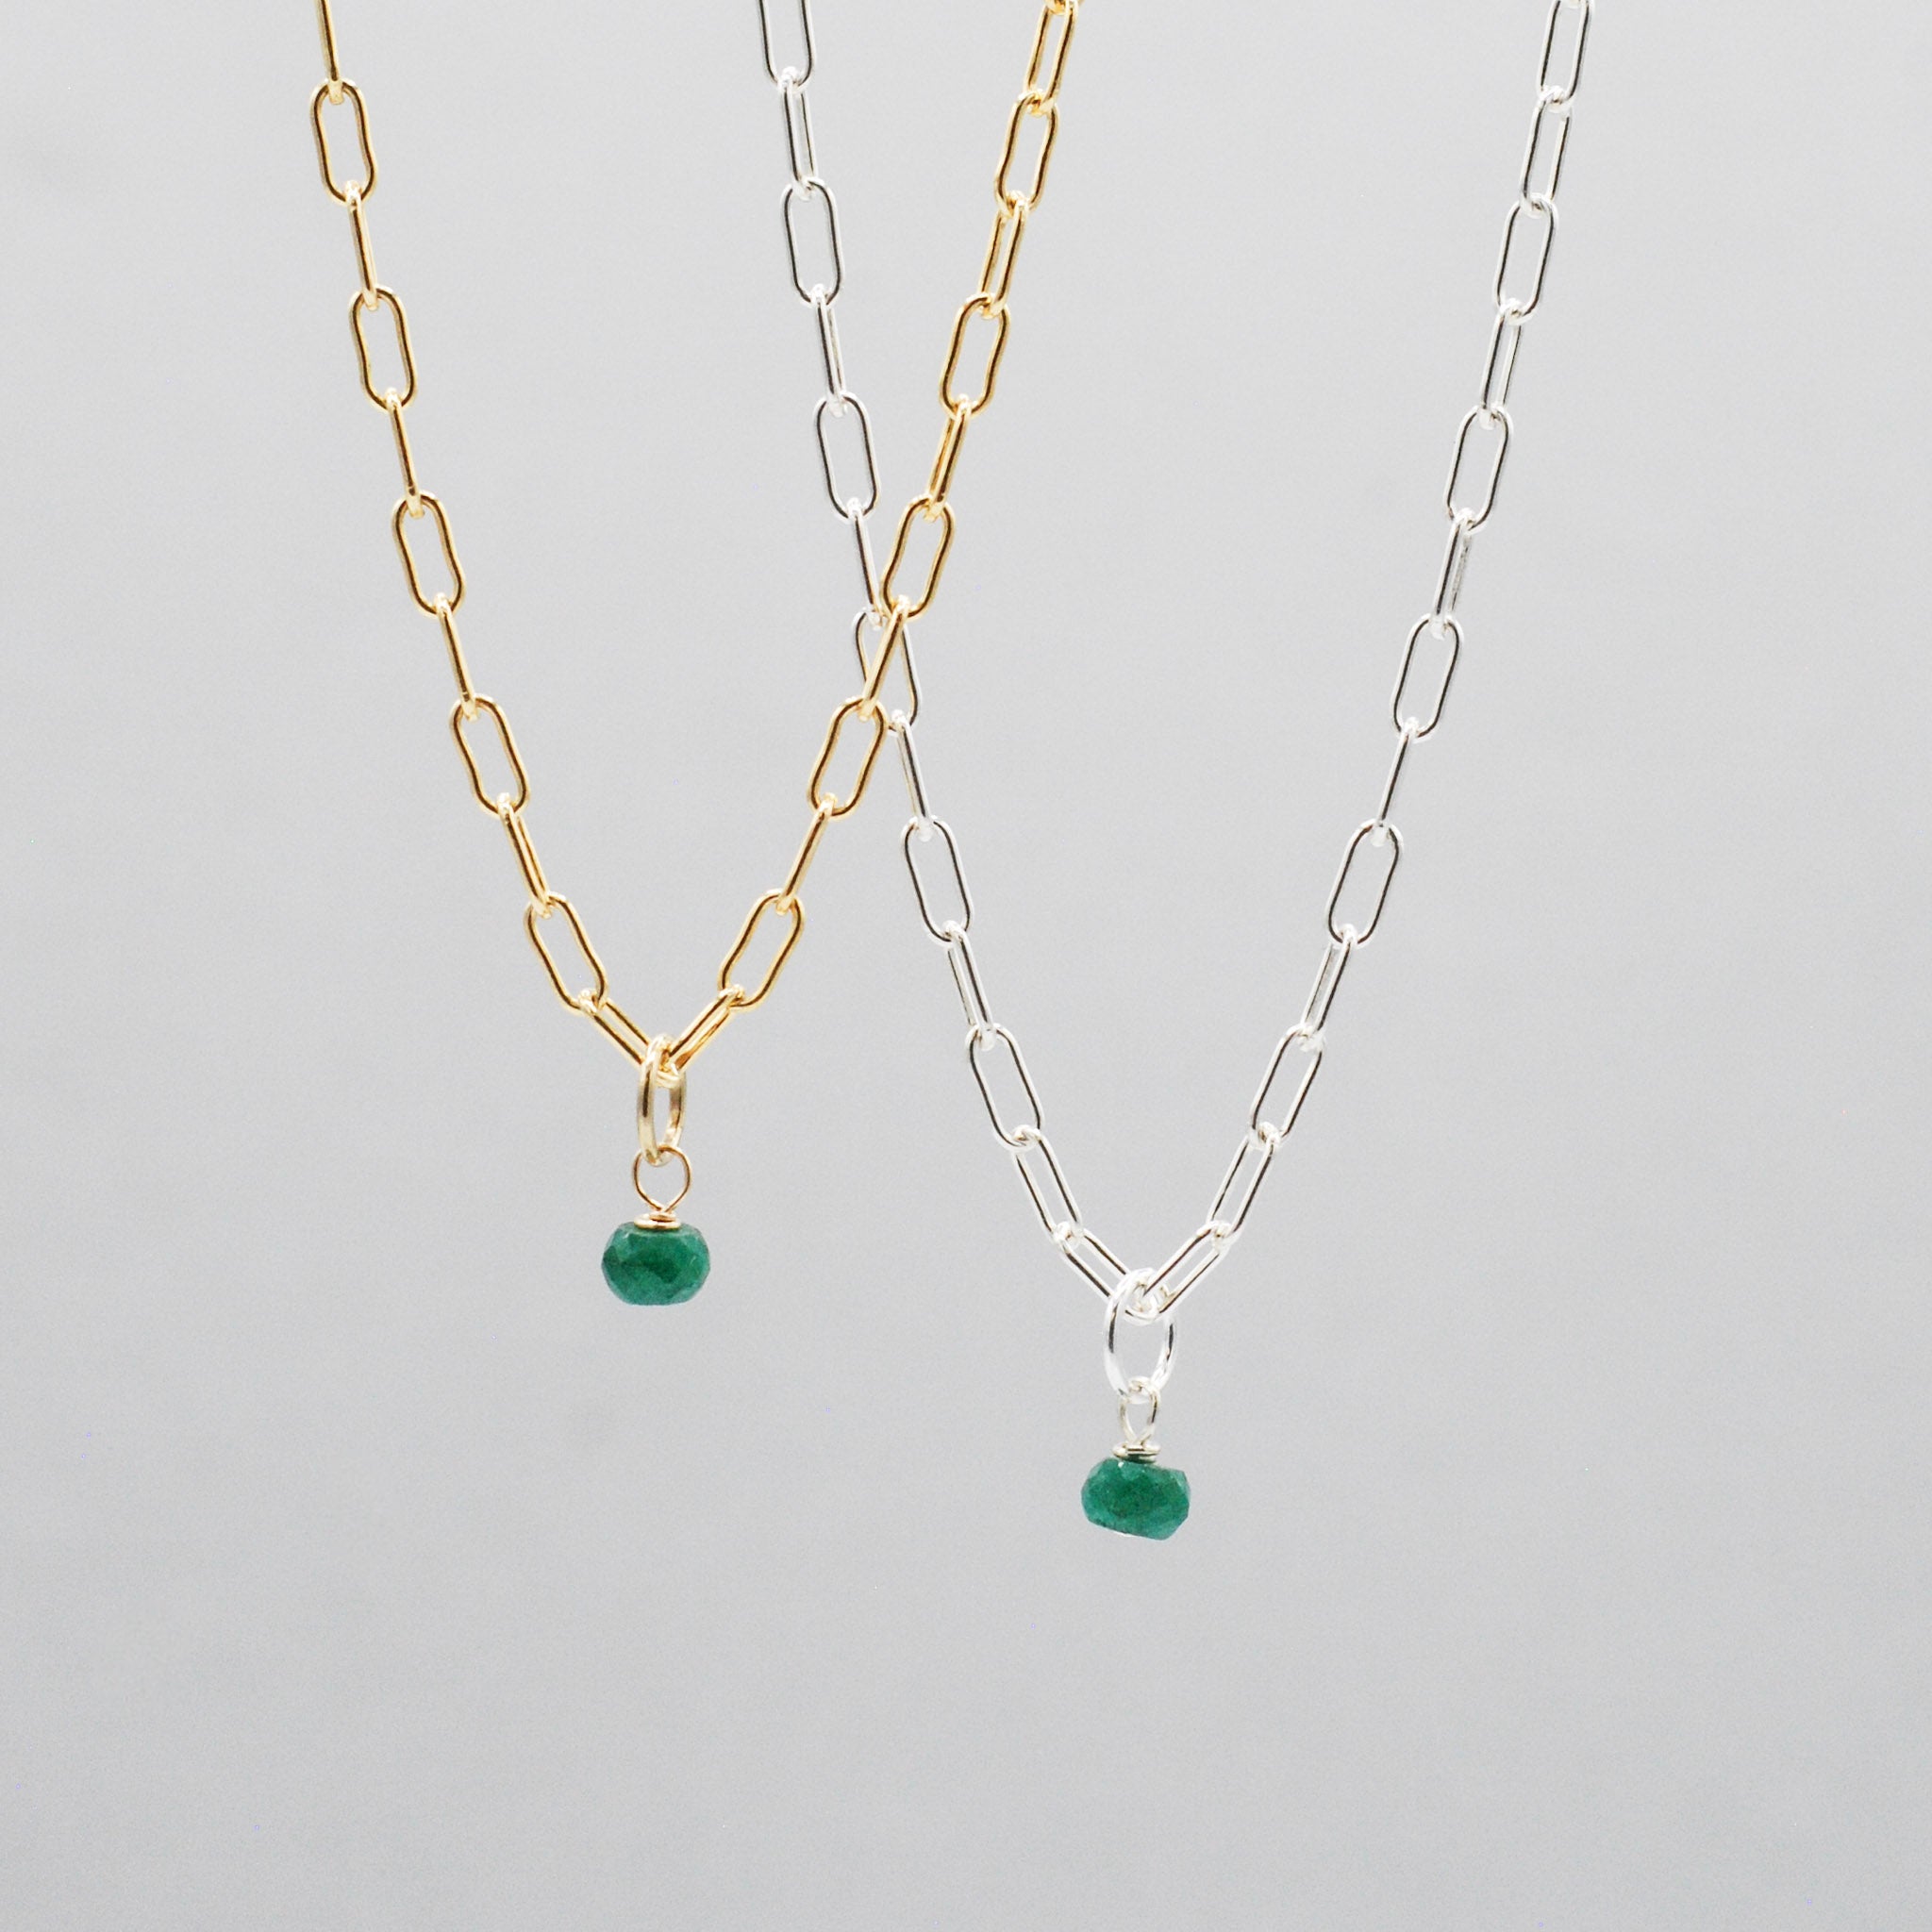 May Emerald Birthstone Paper Clip Necklace - Jewel Ya